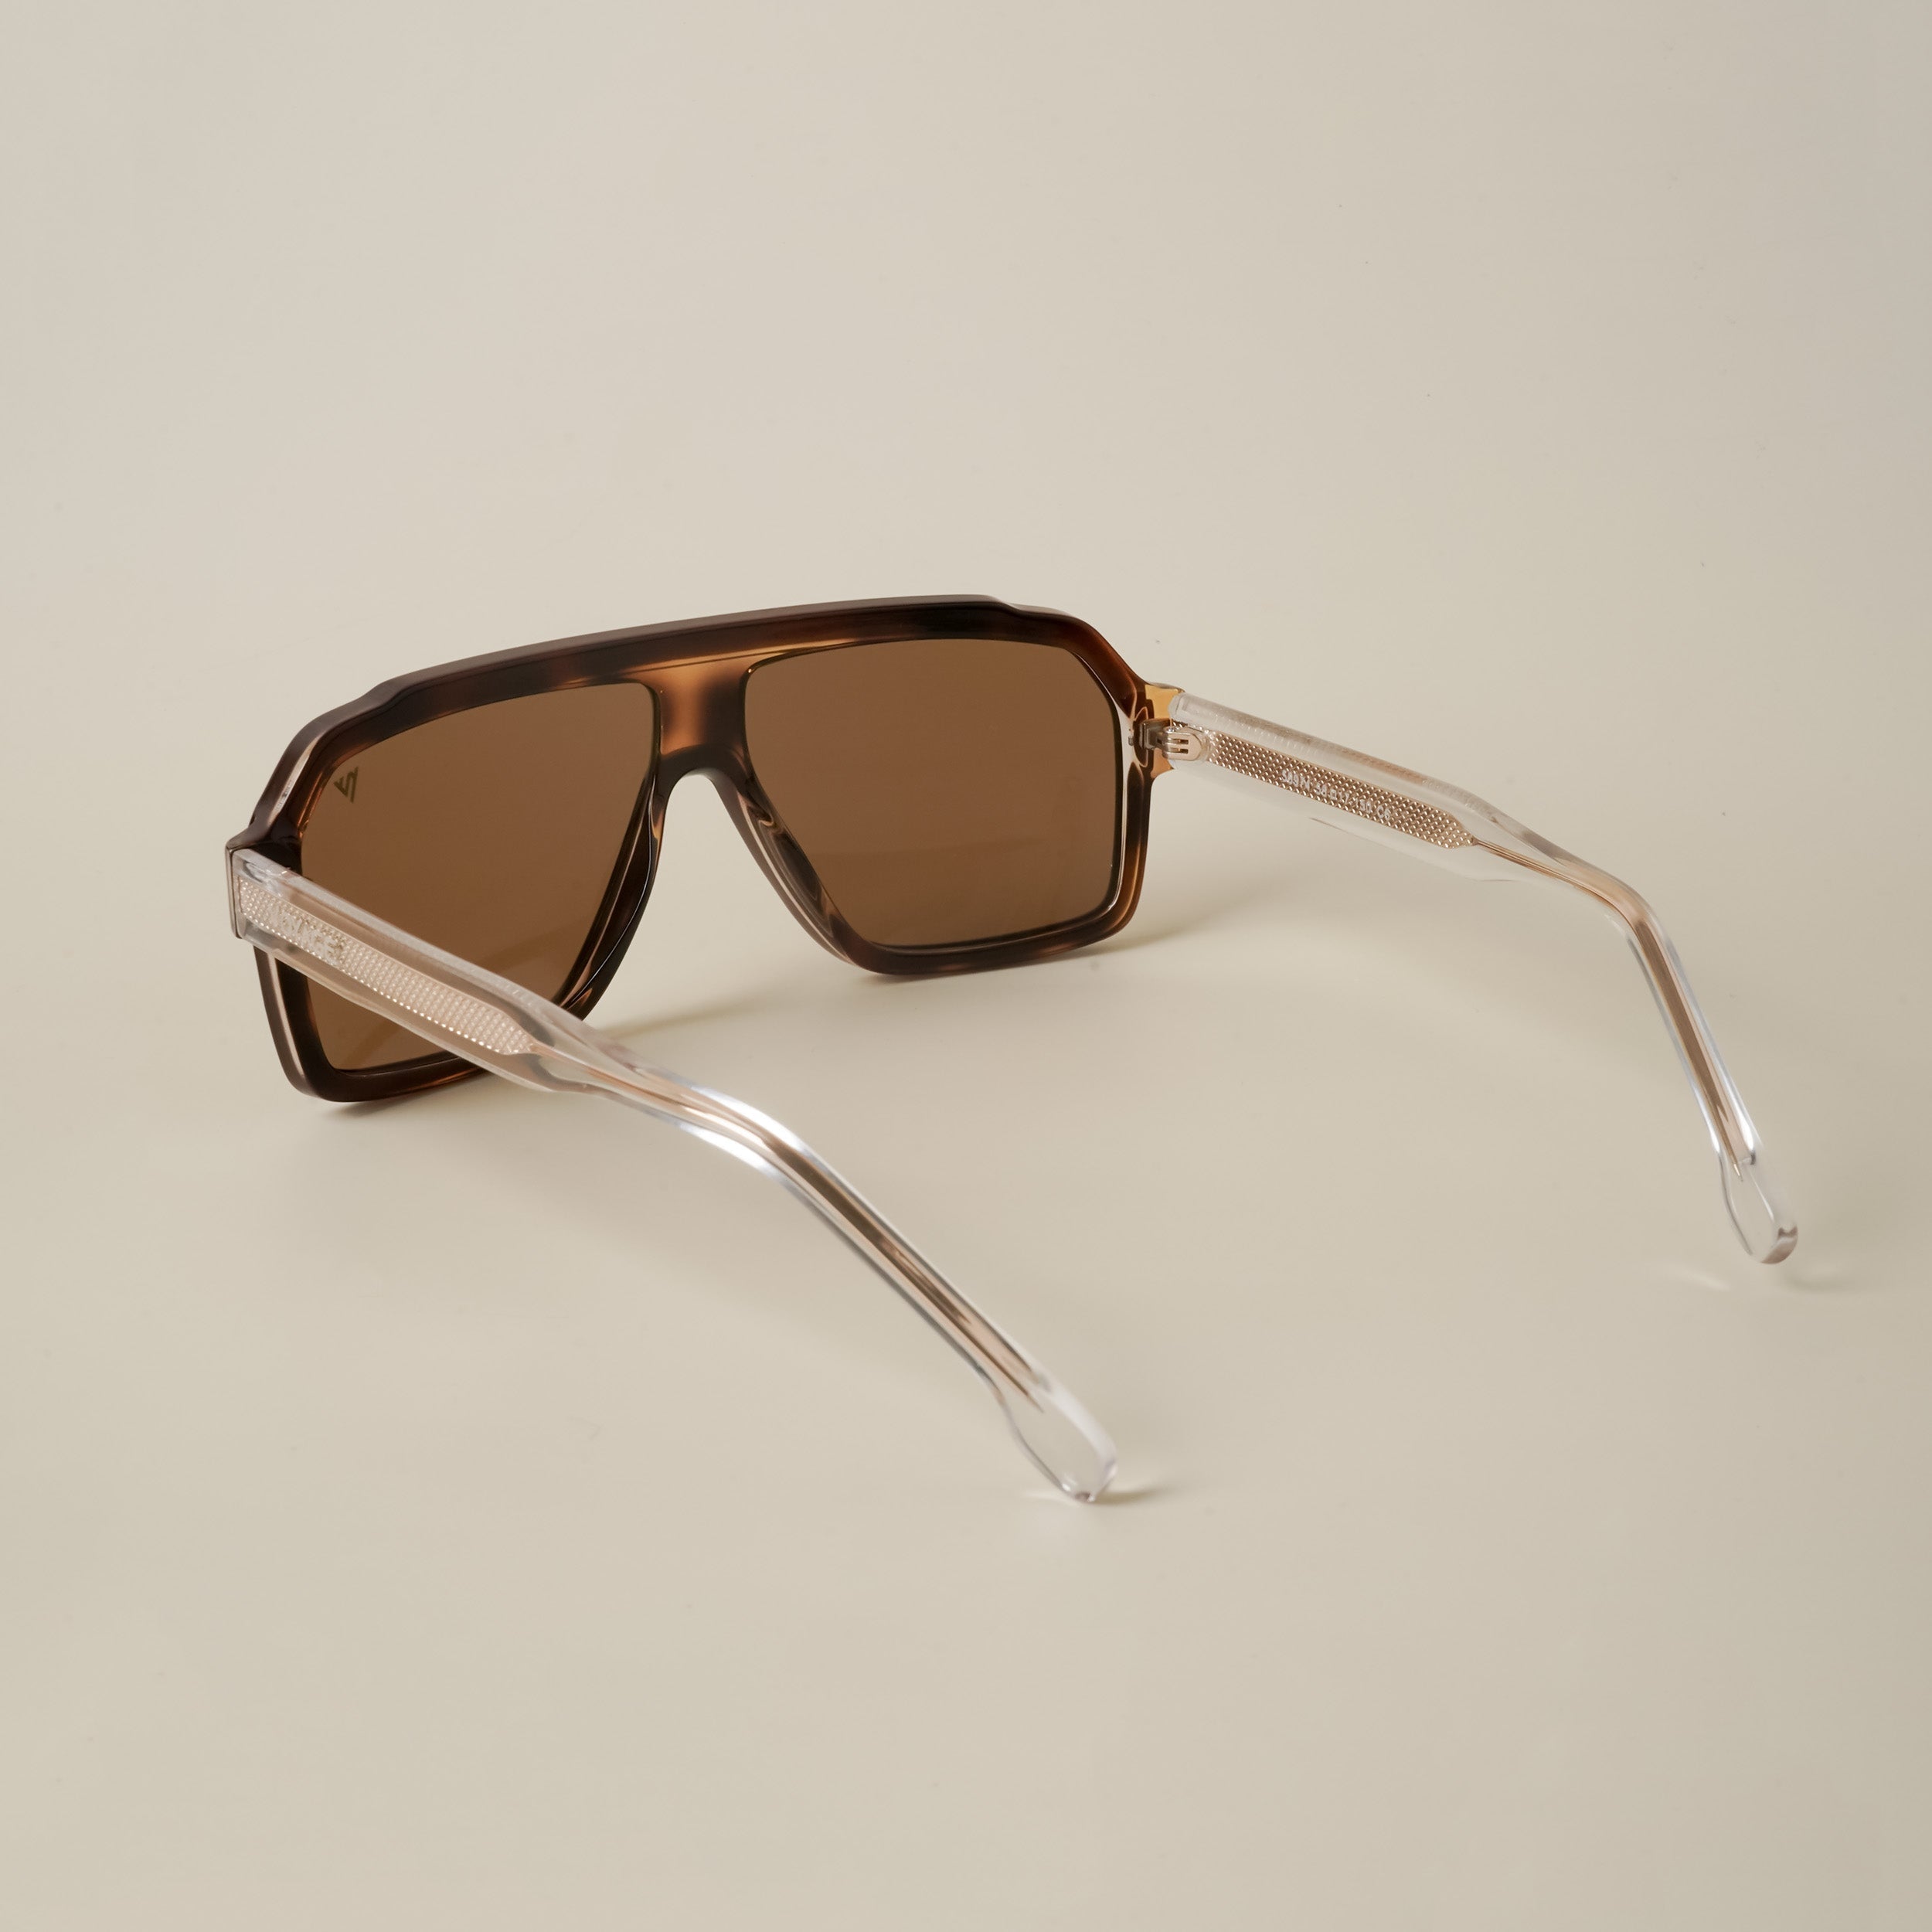 Voyage Brown Wrap Around Sunglasses for Men & Women - MG4744